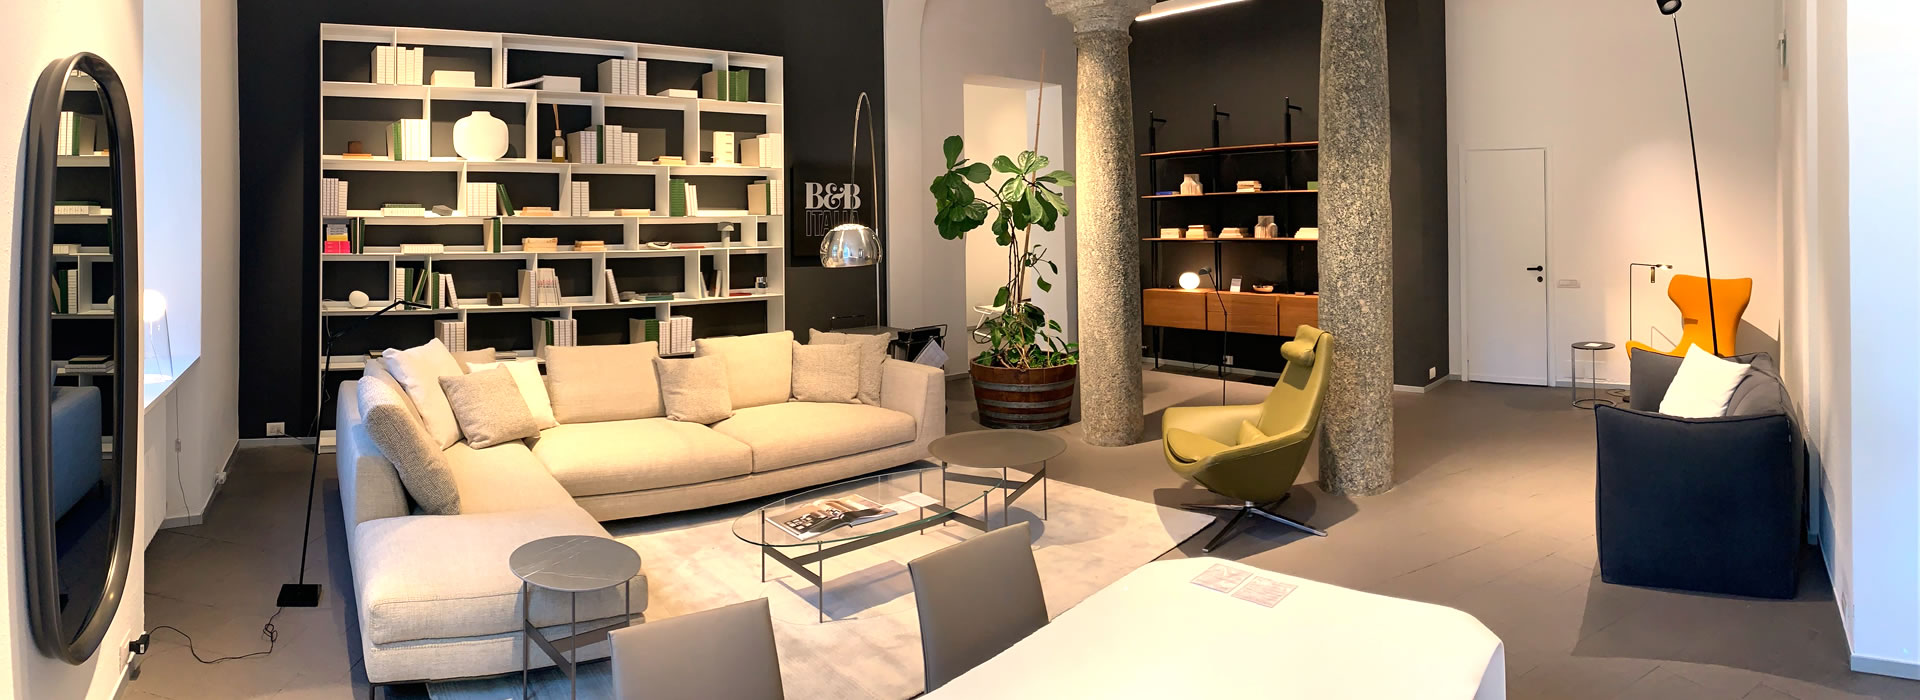 Visit the new flagship store b&b italia como